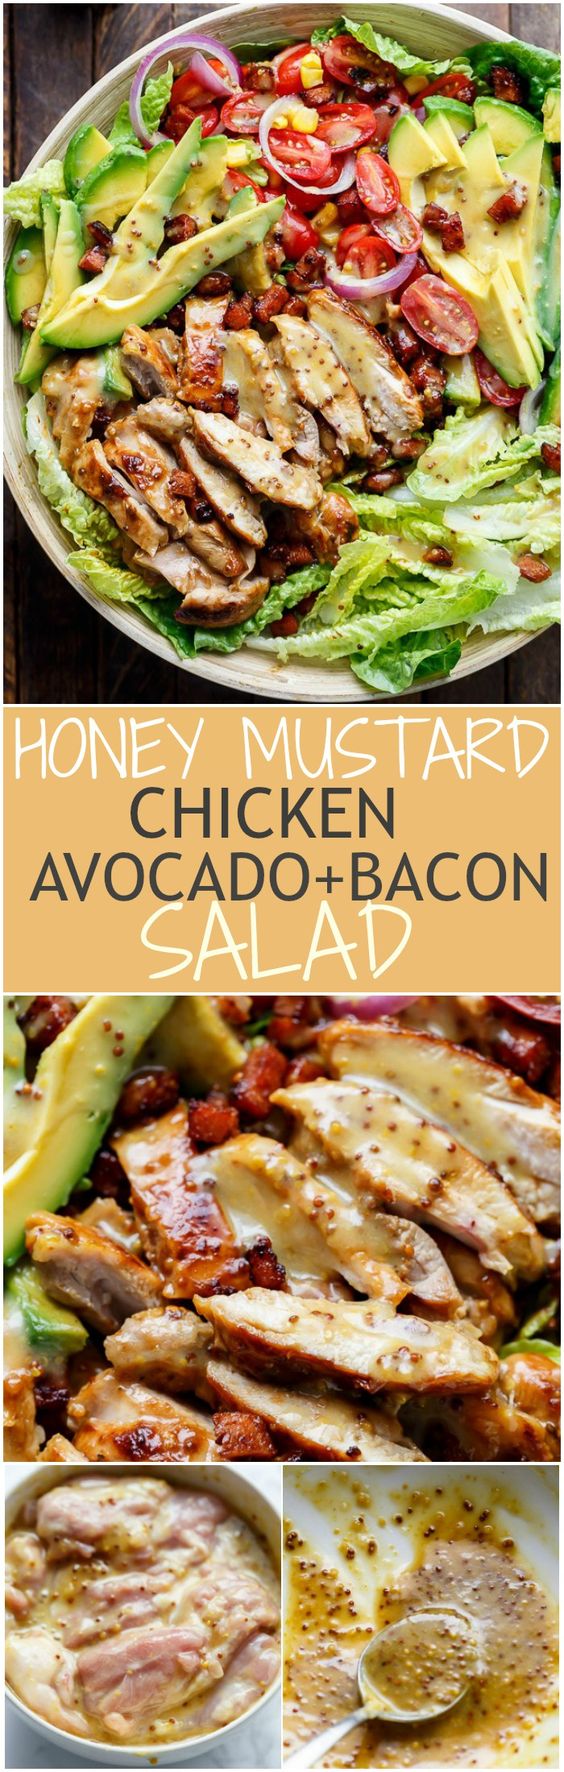 Most Pinned Salad Recipe on Pinterest 2